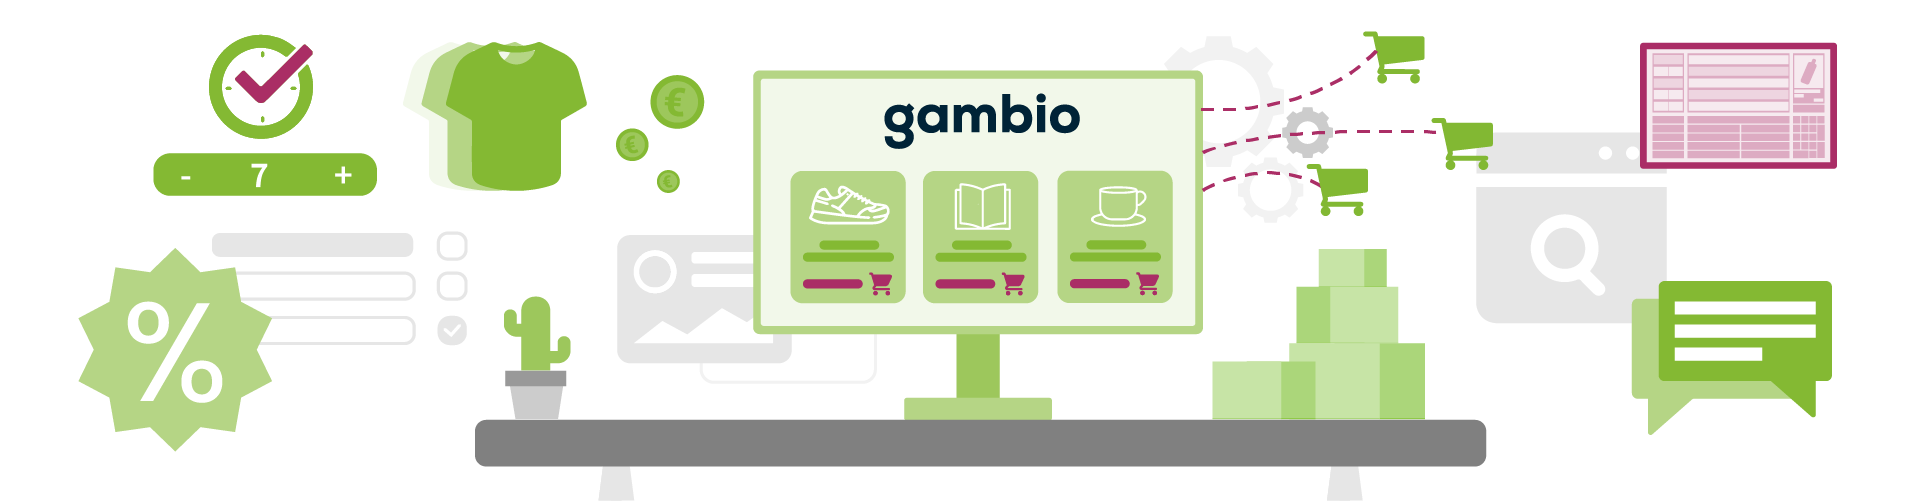 Gambio-Schnittstelle im VARIO ERP